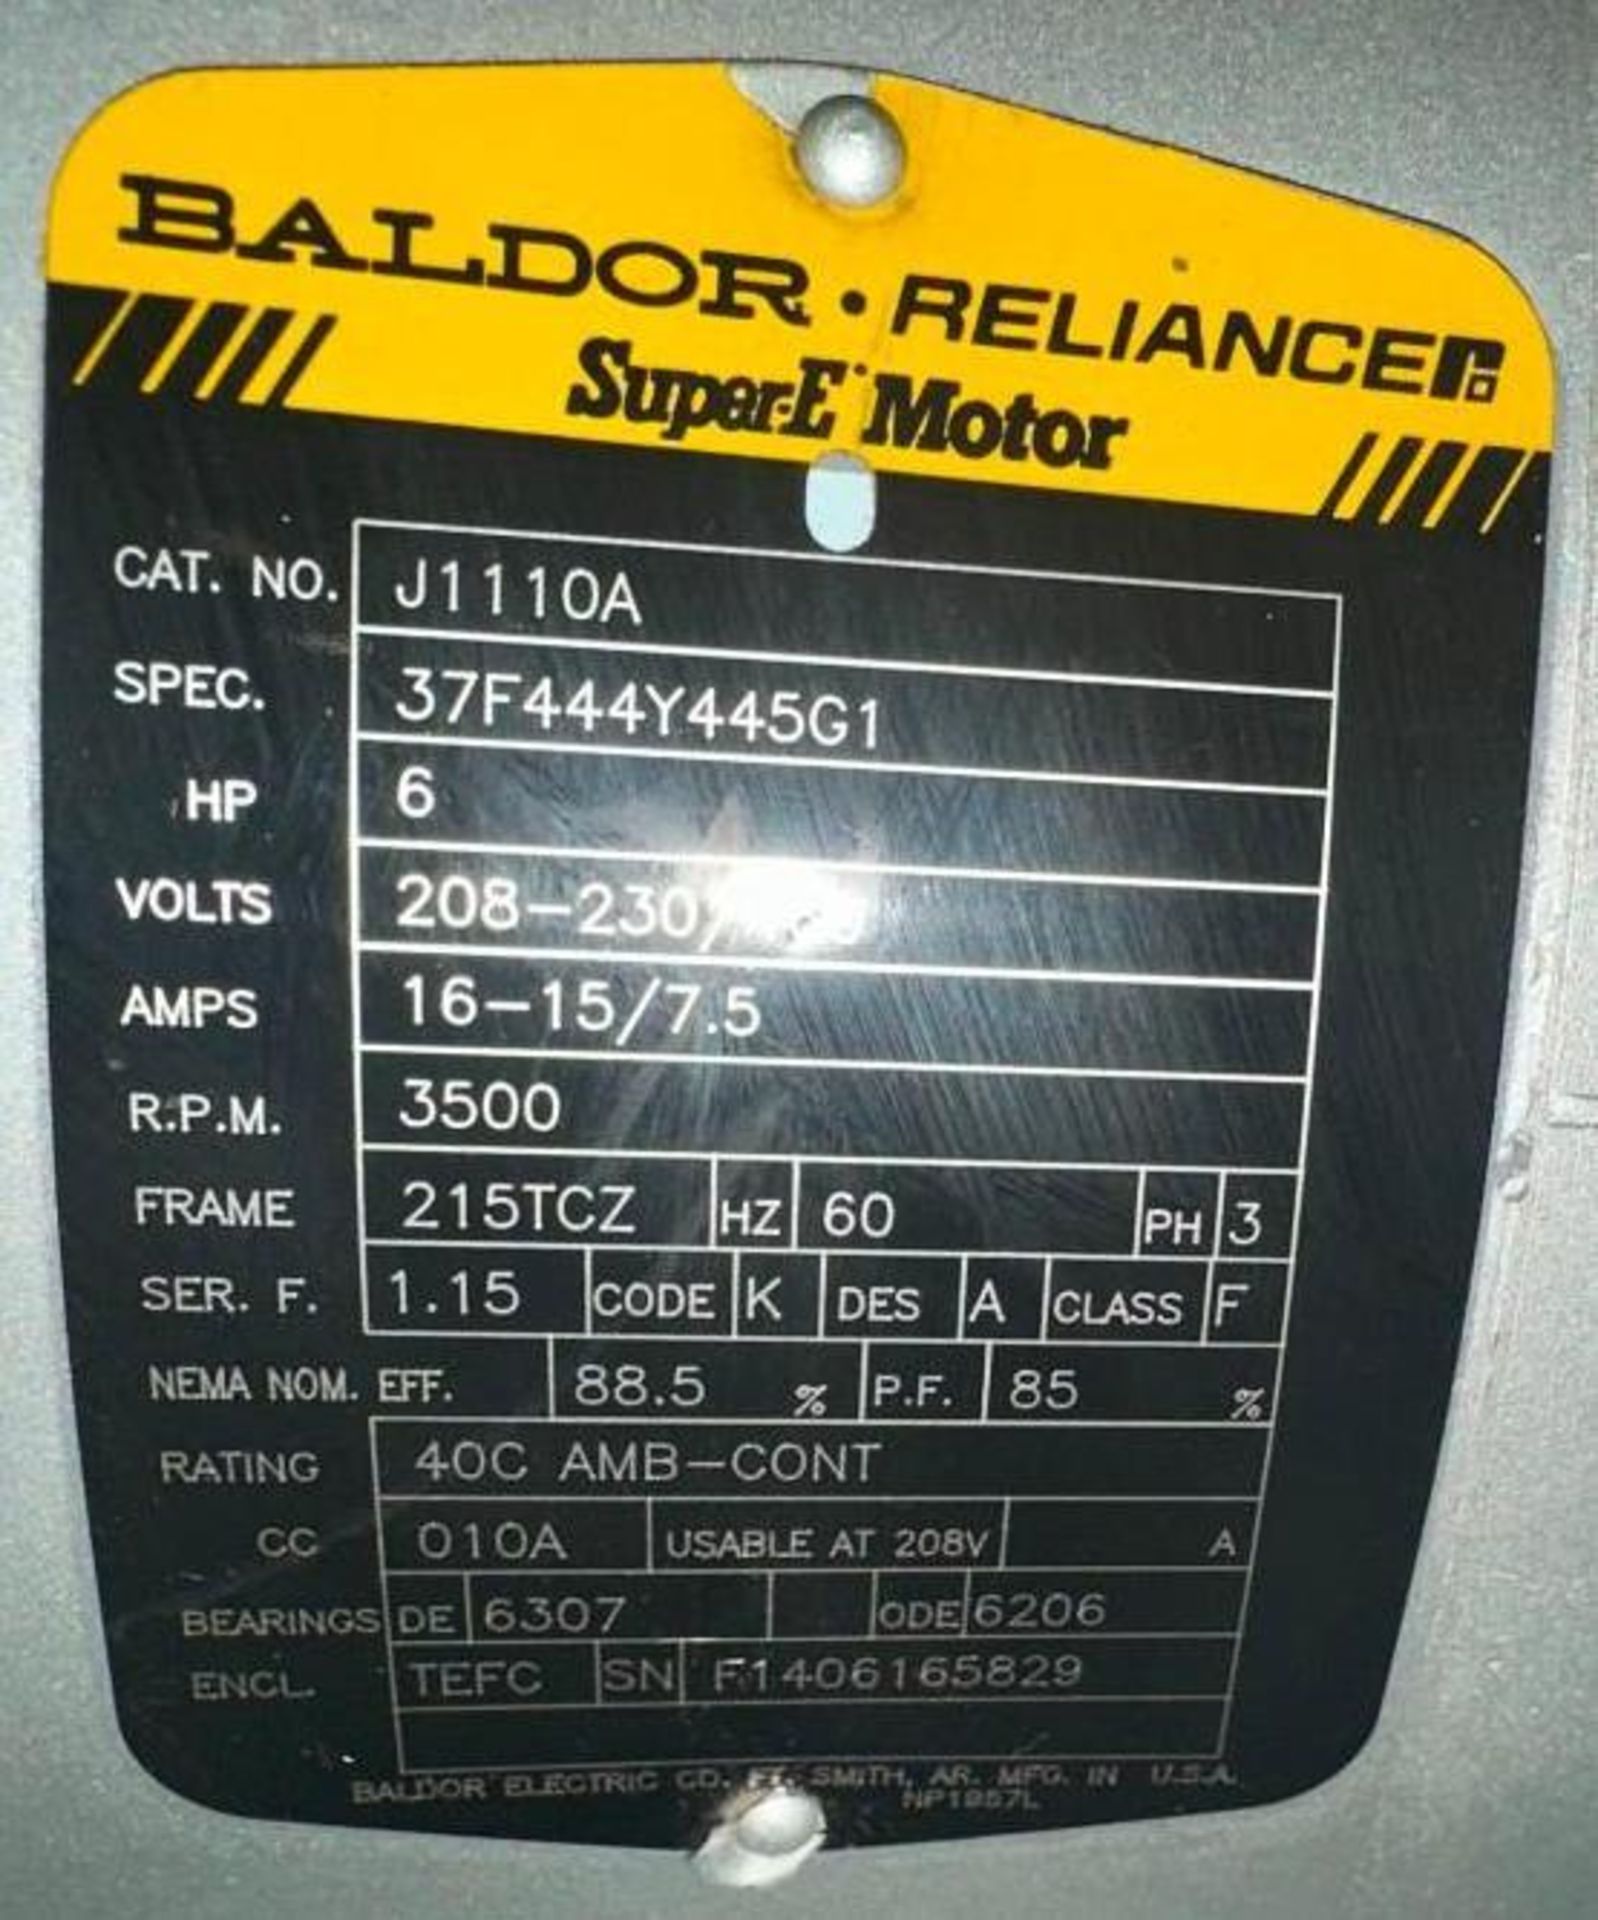 Gast Regenair #R6P355A 3PH, Vacuum Blower w/ Baldor #J1110A / Spec. 37F444Y445G1 SuperE Motor - Image 7 of 7